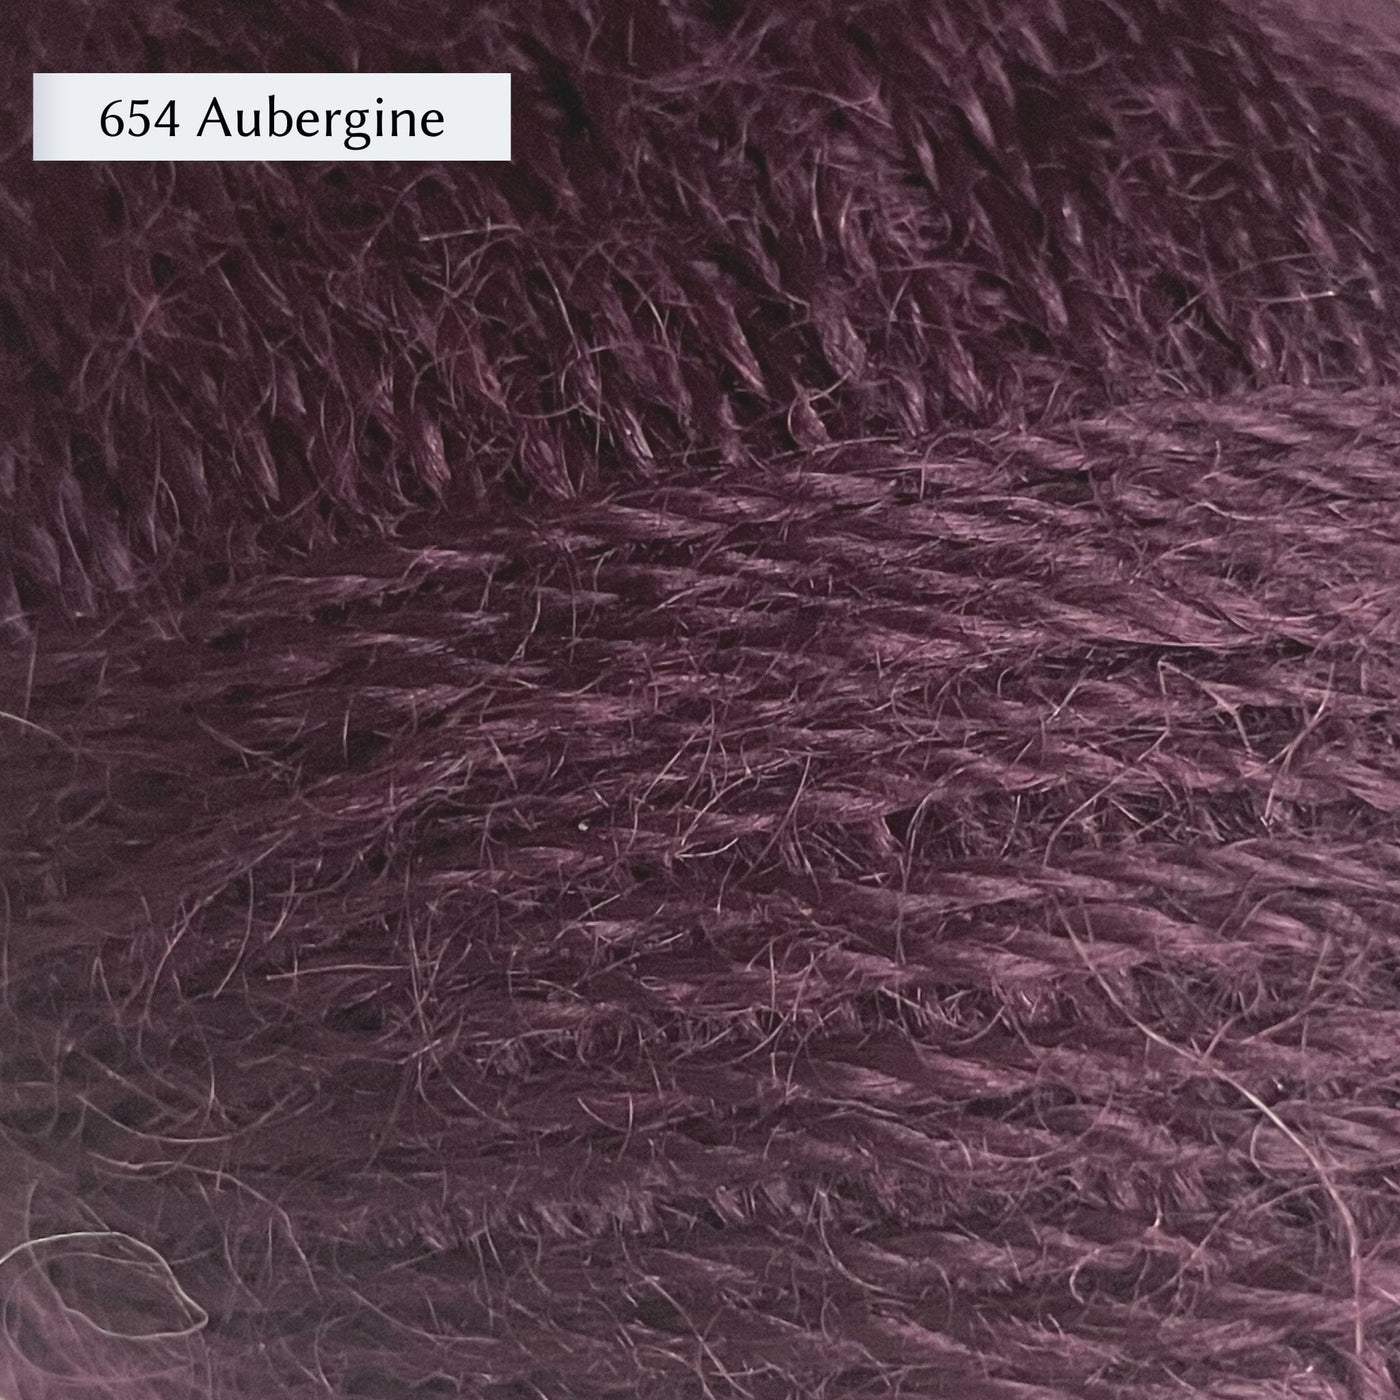 Wensleydale Longwool Sheep Shop 4ply yarn, a fingering weight yarn, in color 654 Aubergine, a mid-tone warm purple